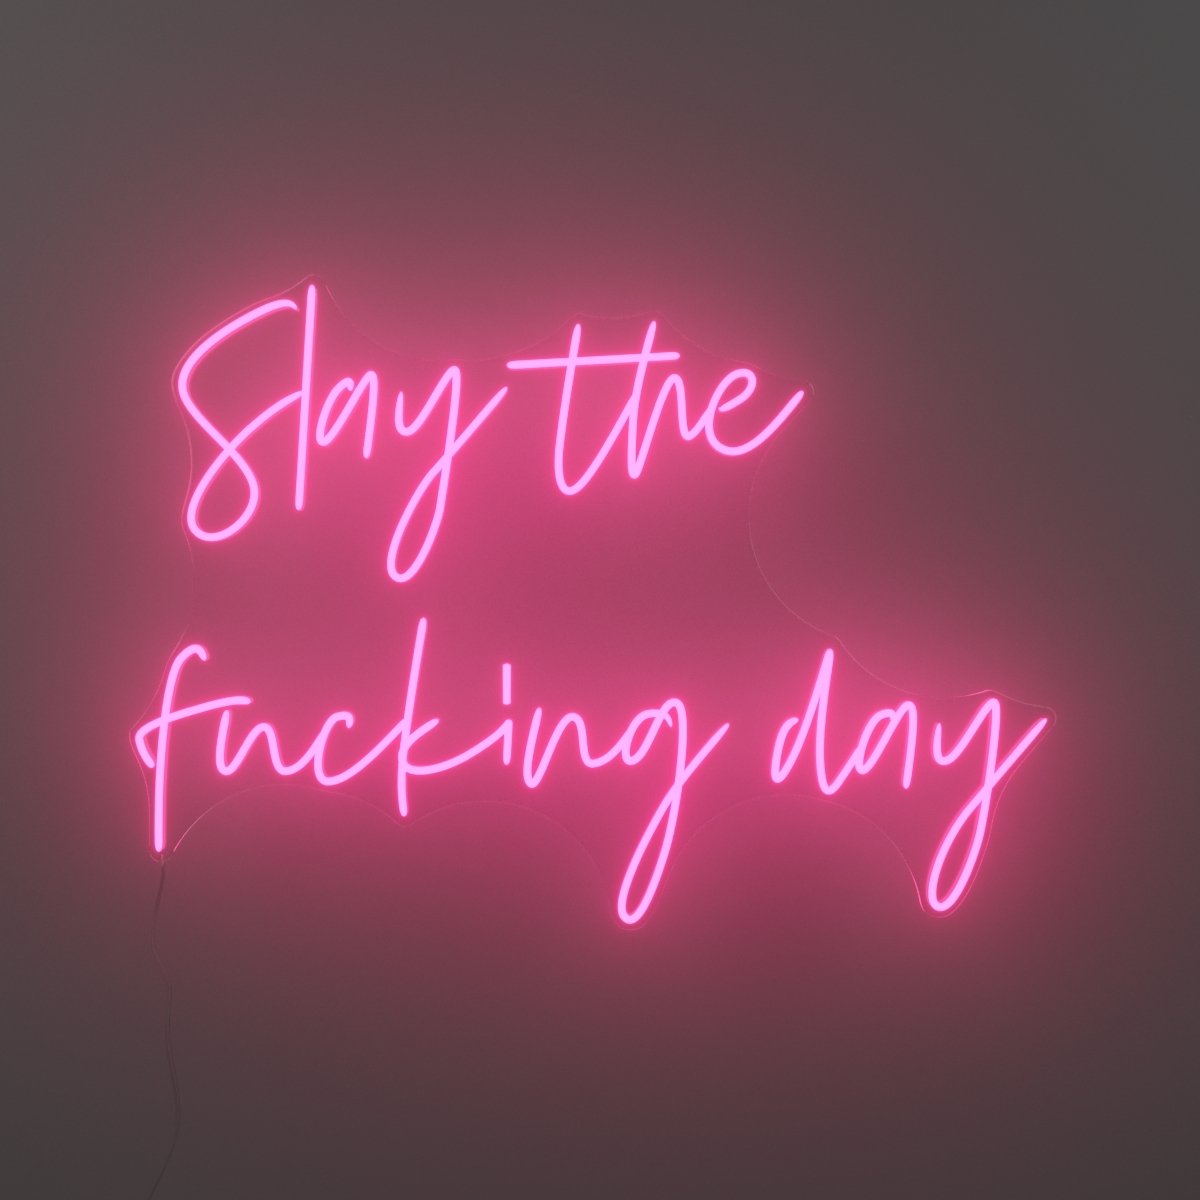 Slay the fucking day by Zoe Roe, Neon Tabela - Neonbir